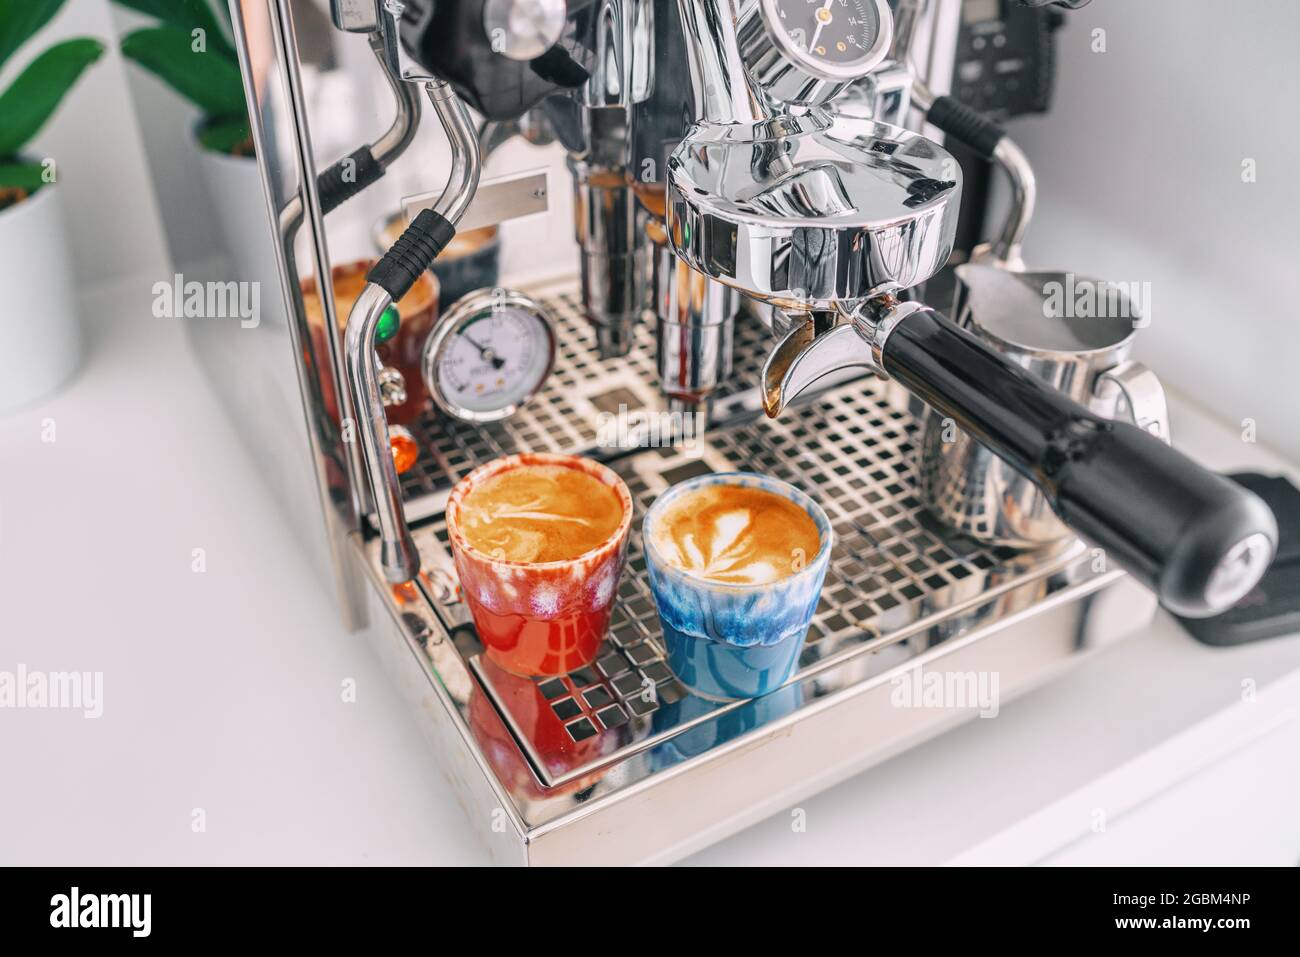 Two macchiato shots in espresso cups on coffee machine at home - white apartment kitchen, modern interior lifestyle Stock Photo